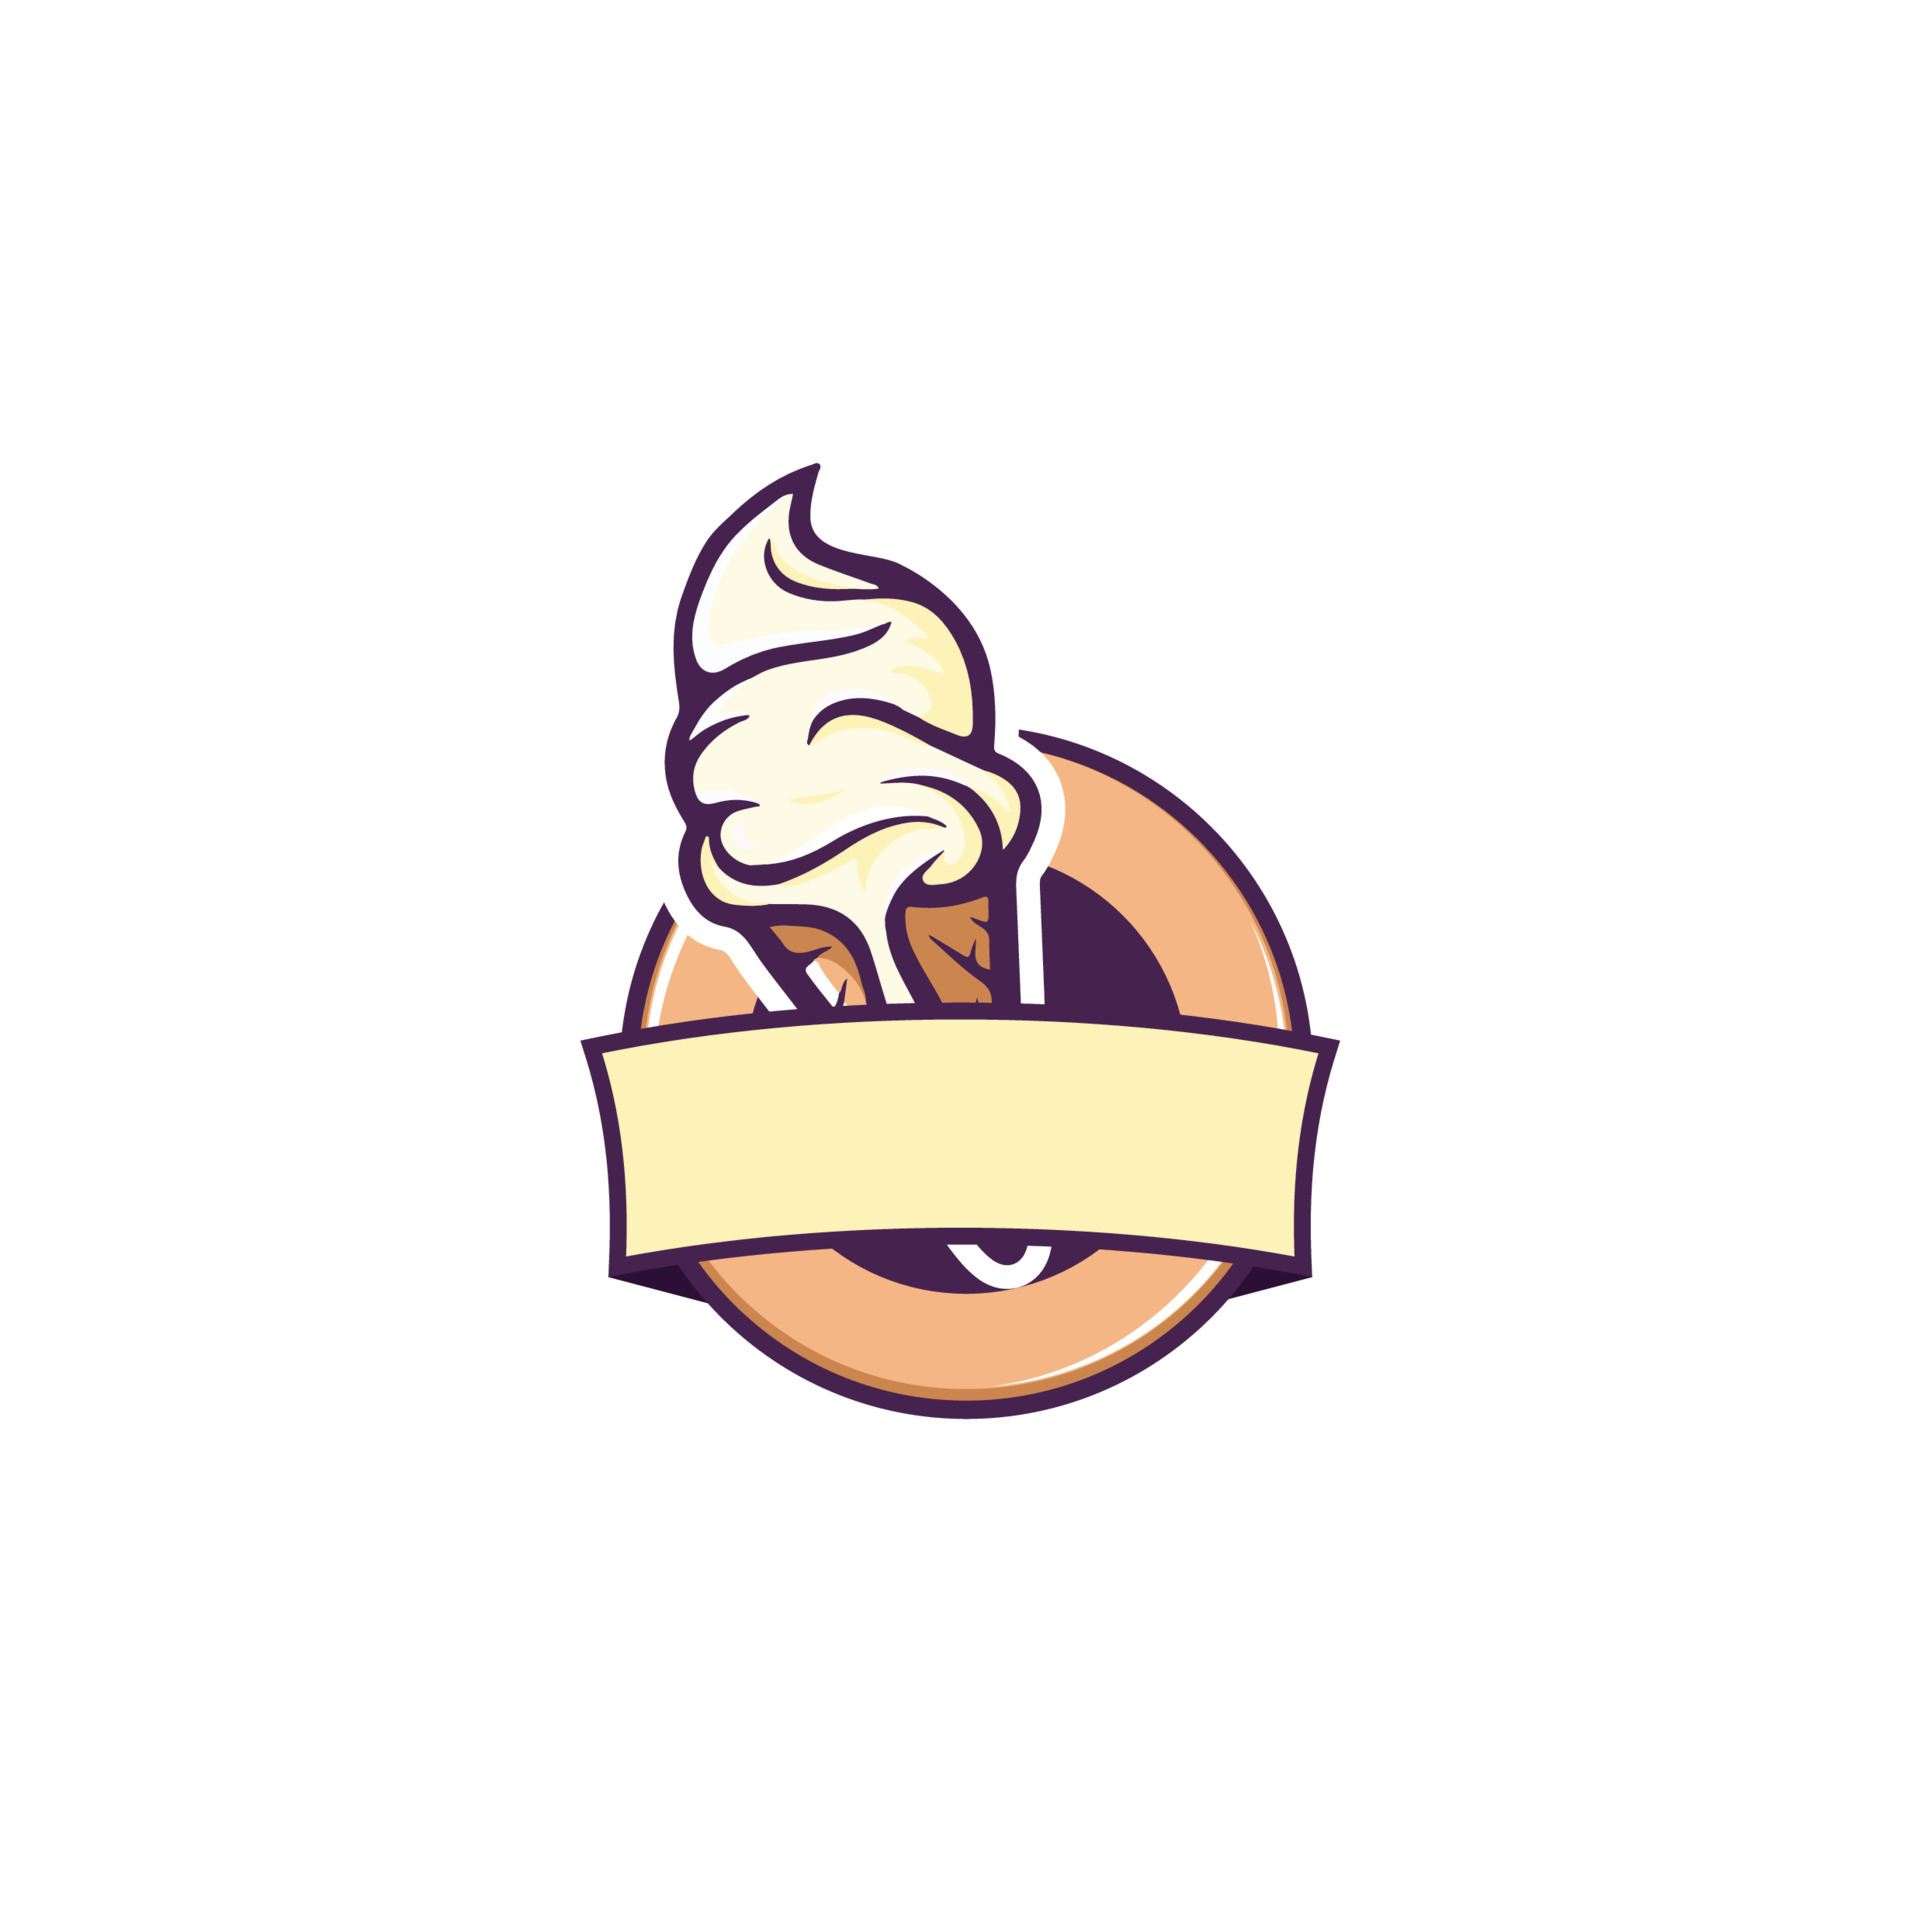 Modern ice cream logo design Royalty Free Vector Image